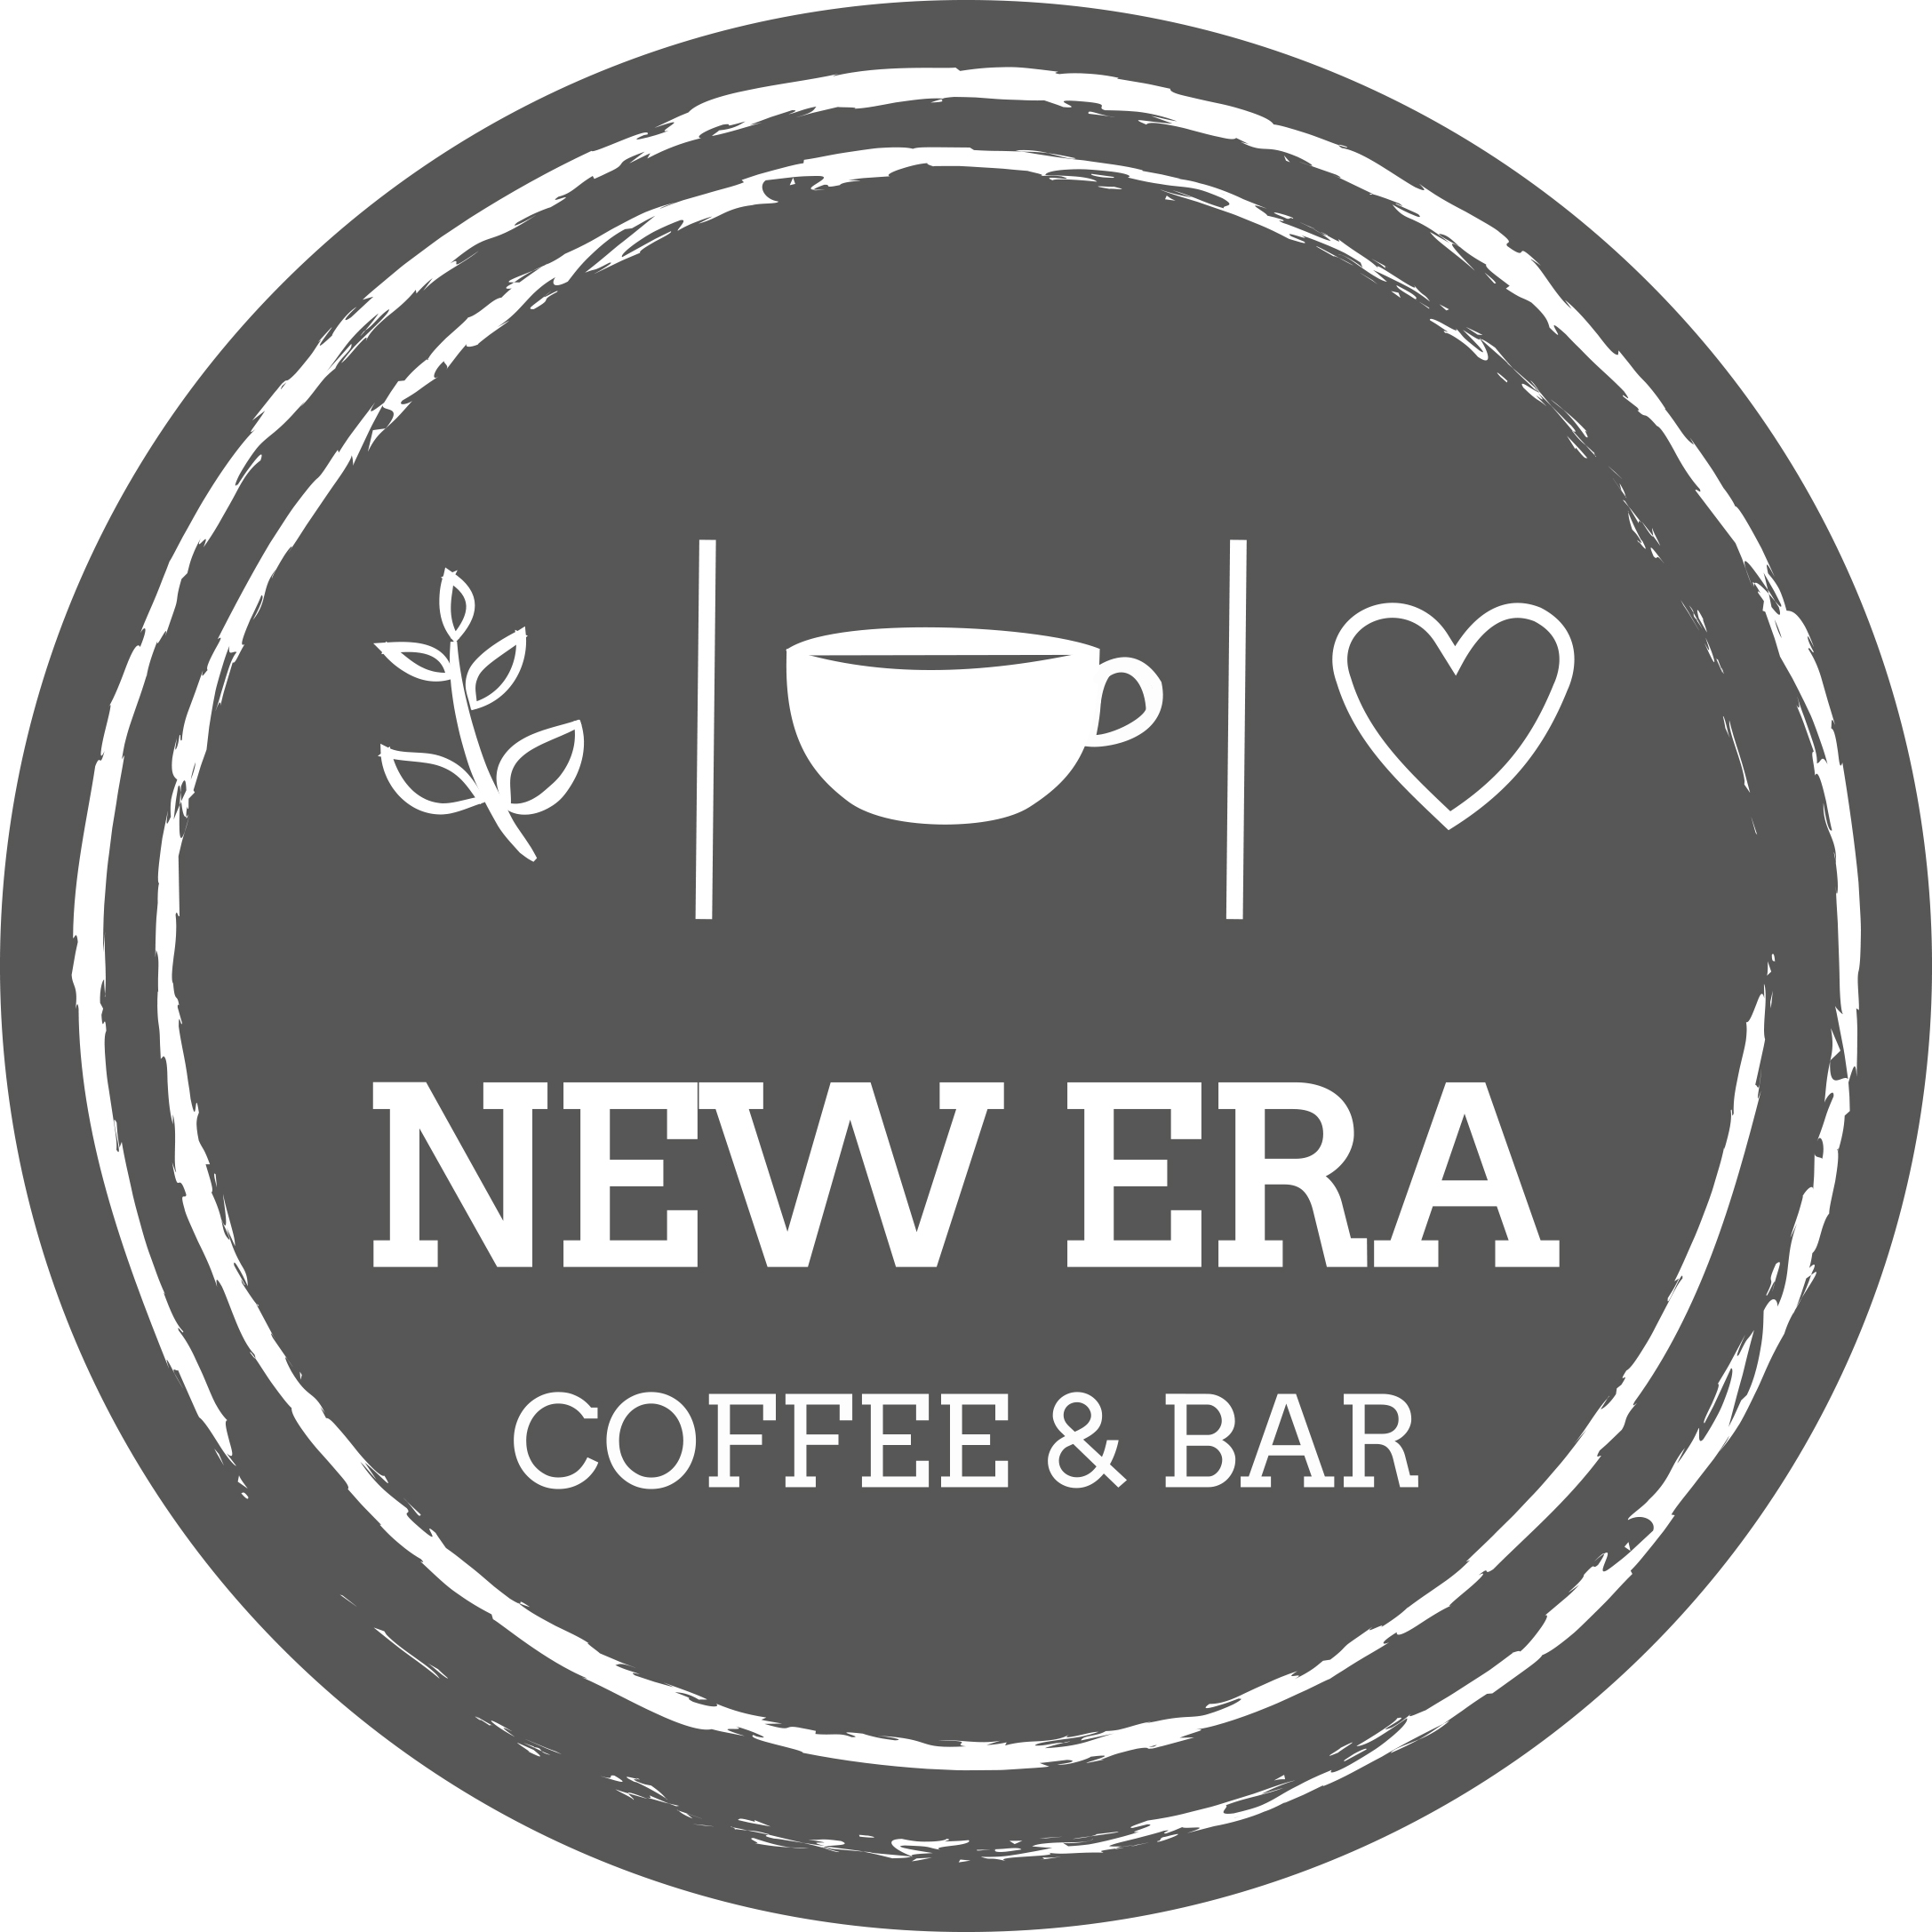 NEW ERA COFFEE & BAR